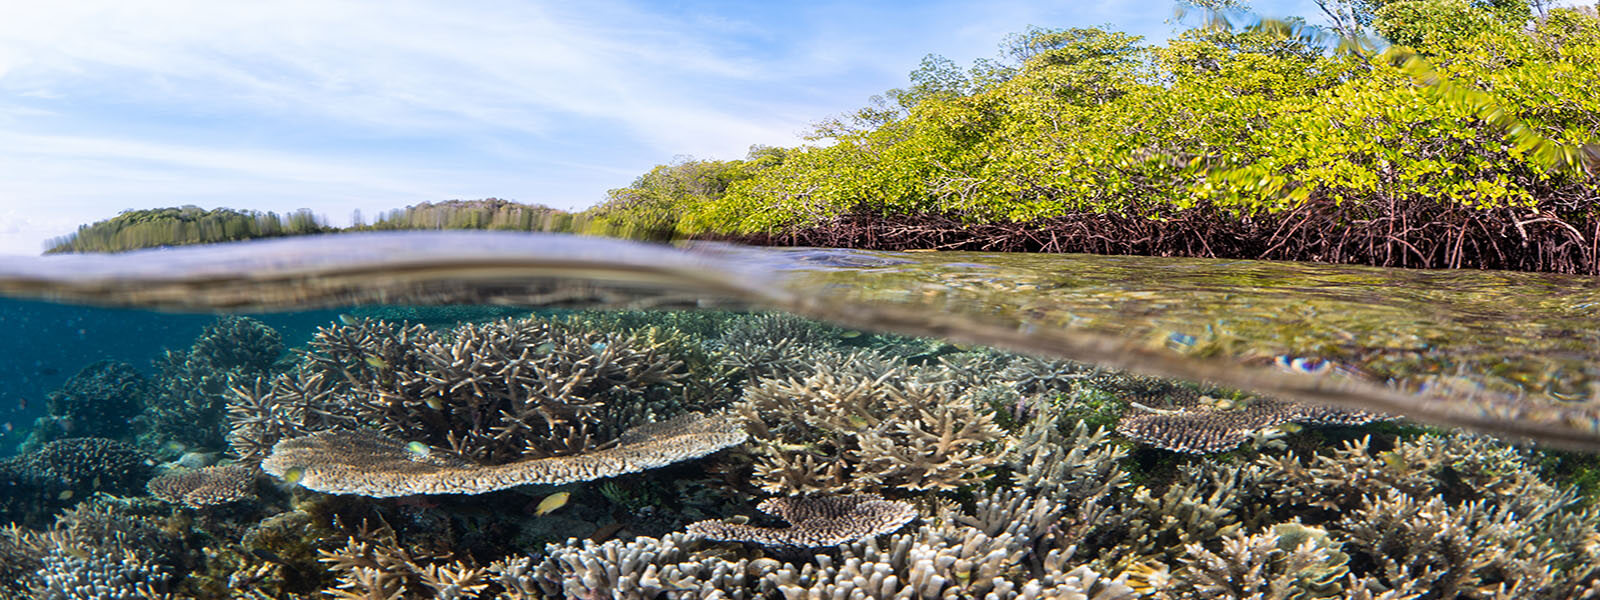 Snorkeling reefs that grow up to mangroves in Raja Ampat